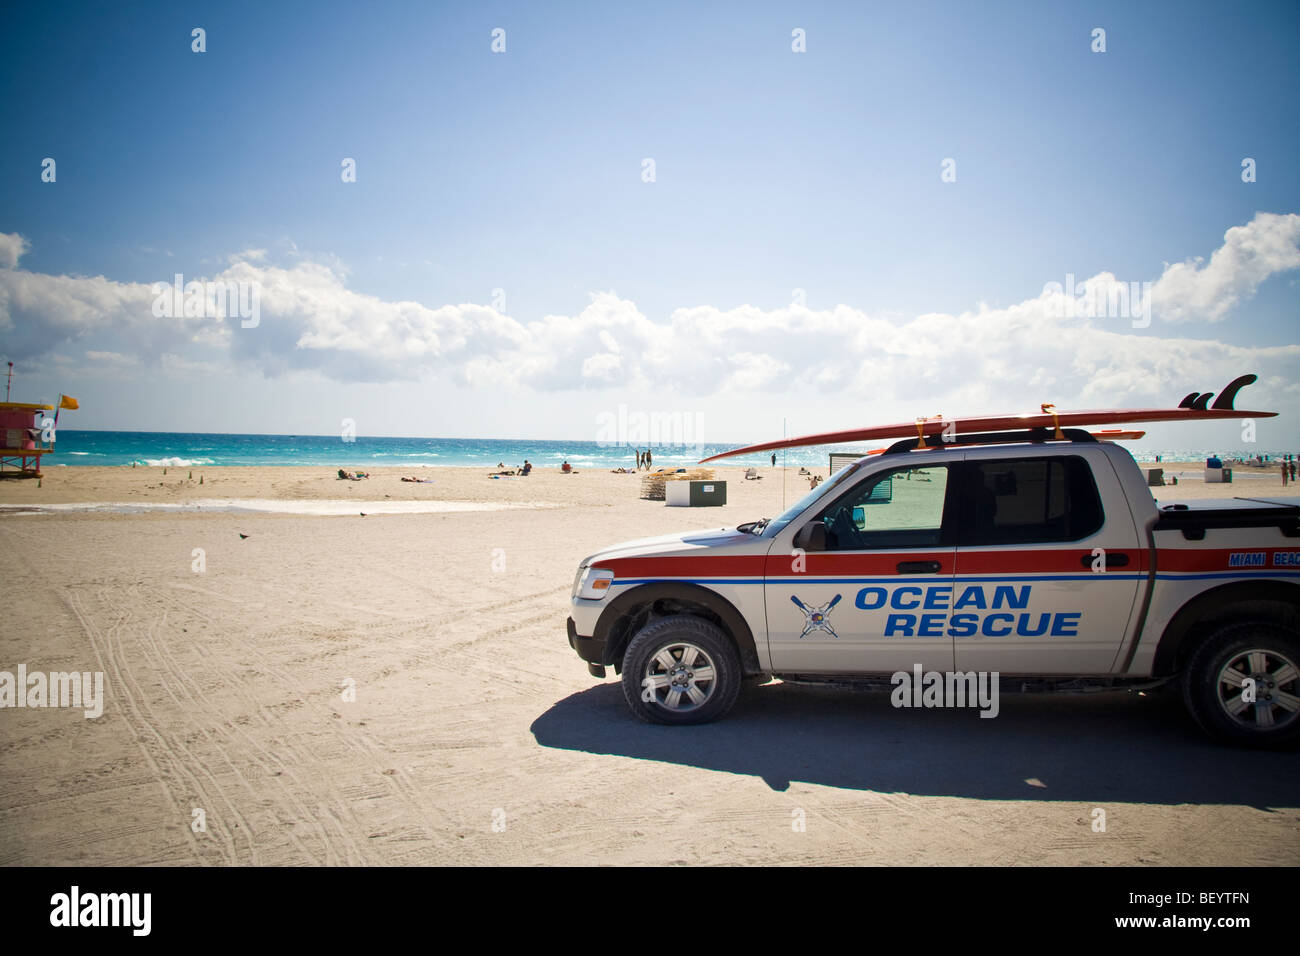 Ocean rescue vehicle ORV south beach miami florida ocean drive Stock Photo